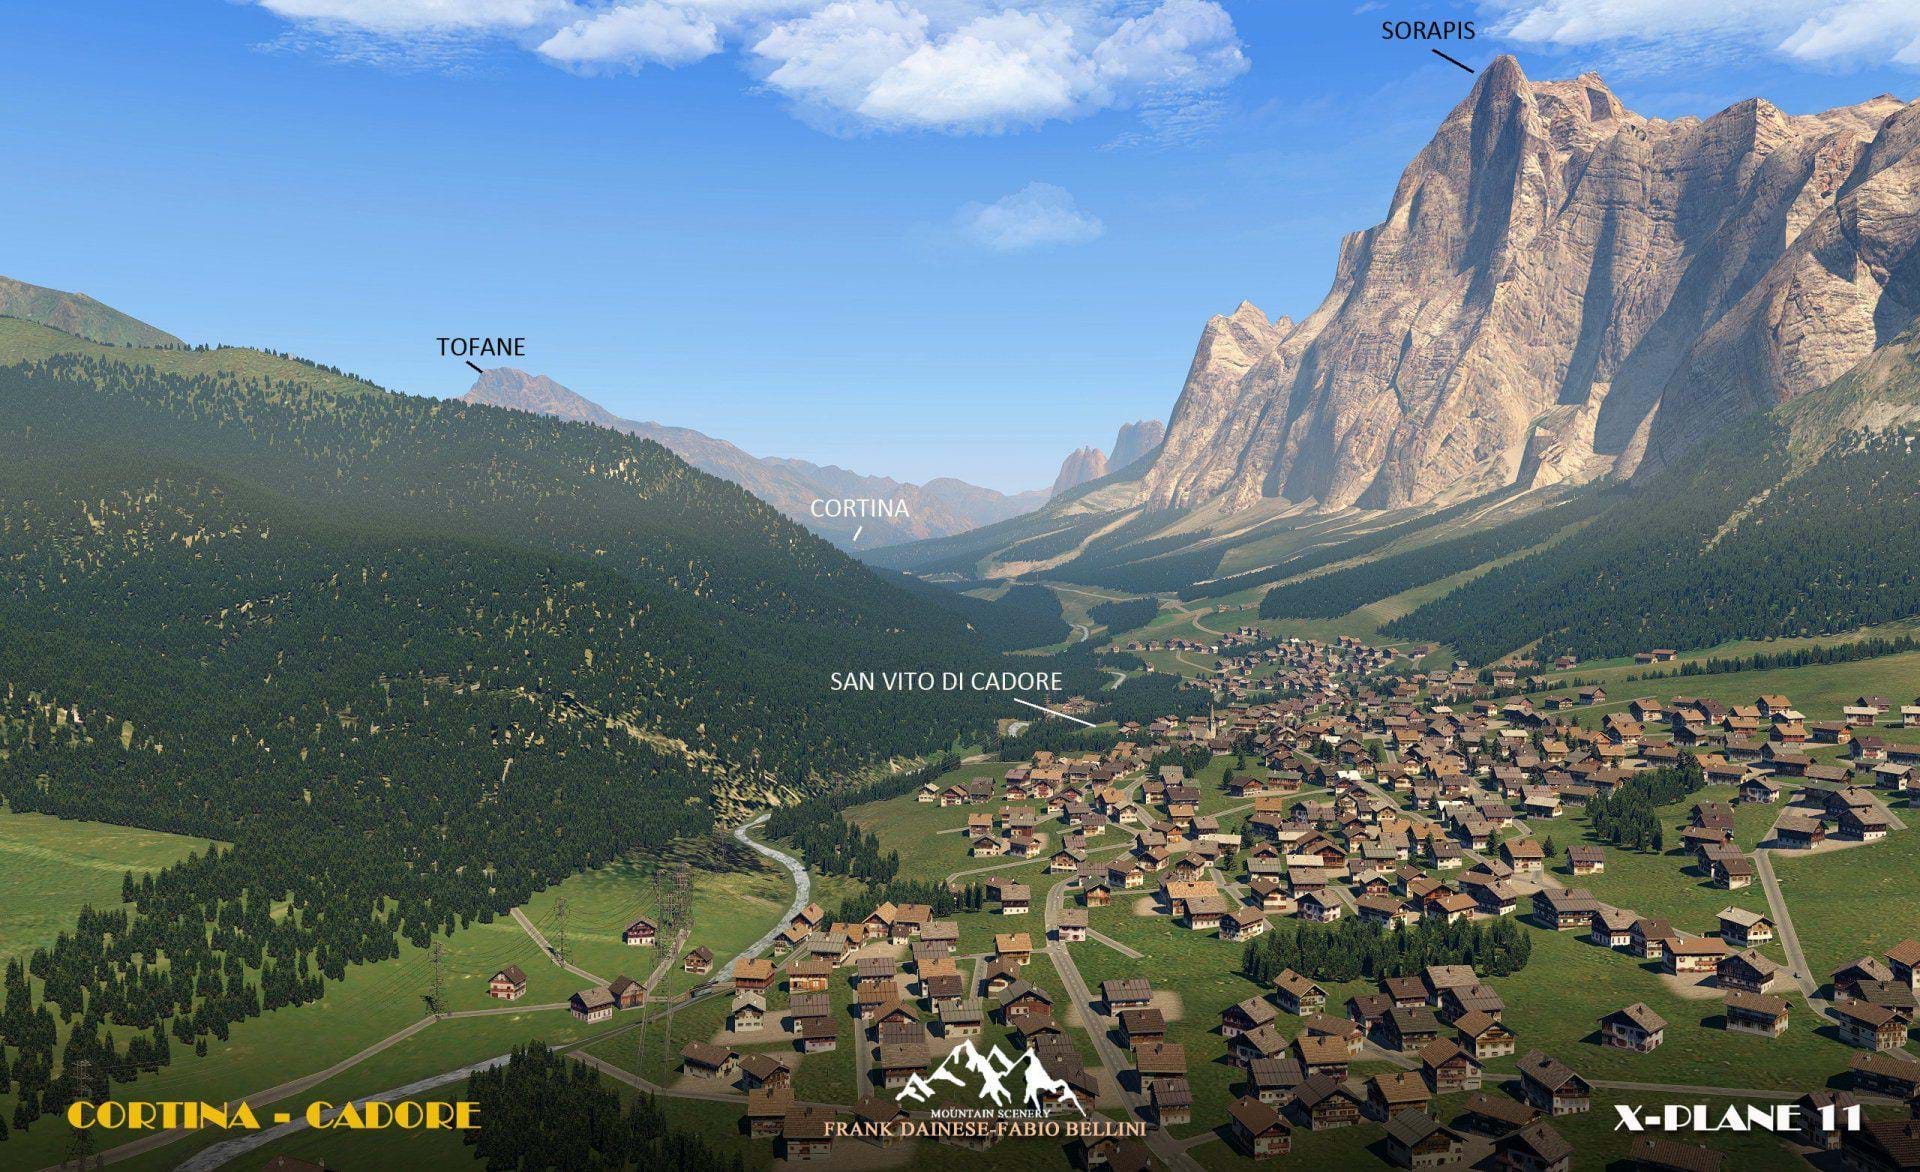 Frank Dainese and Fabio Bellini’s Dolomites 3D - Cortina - Cadore